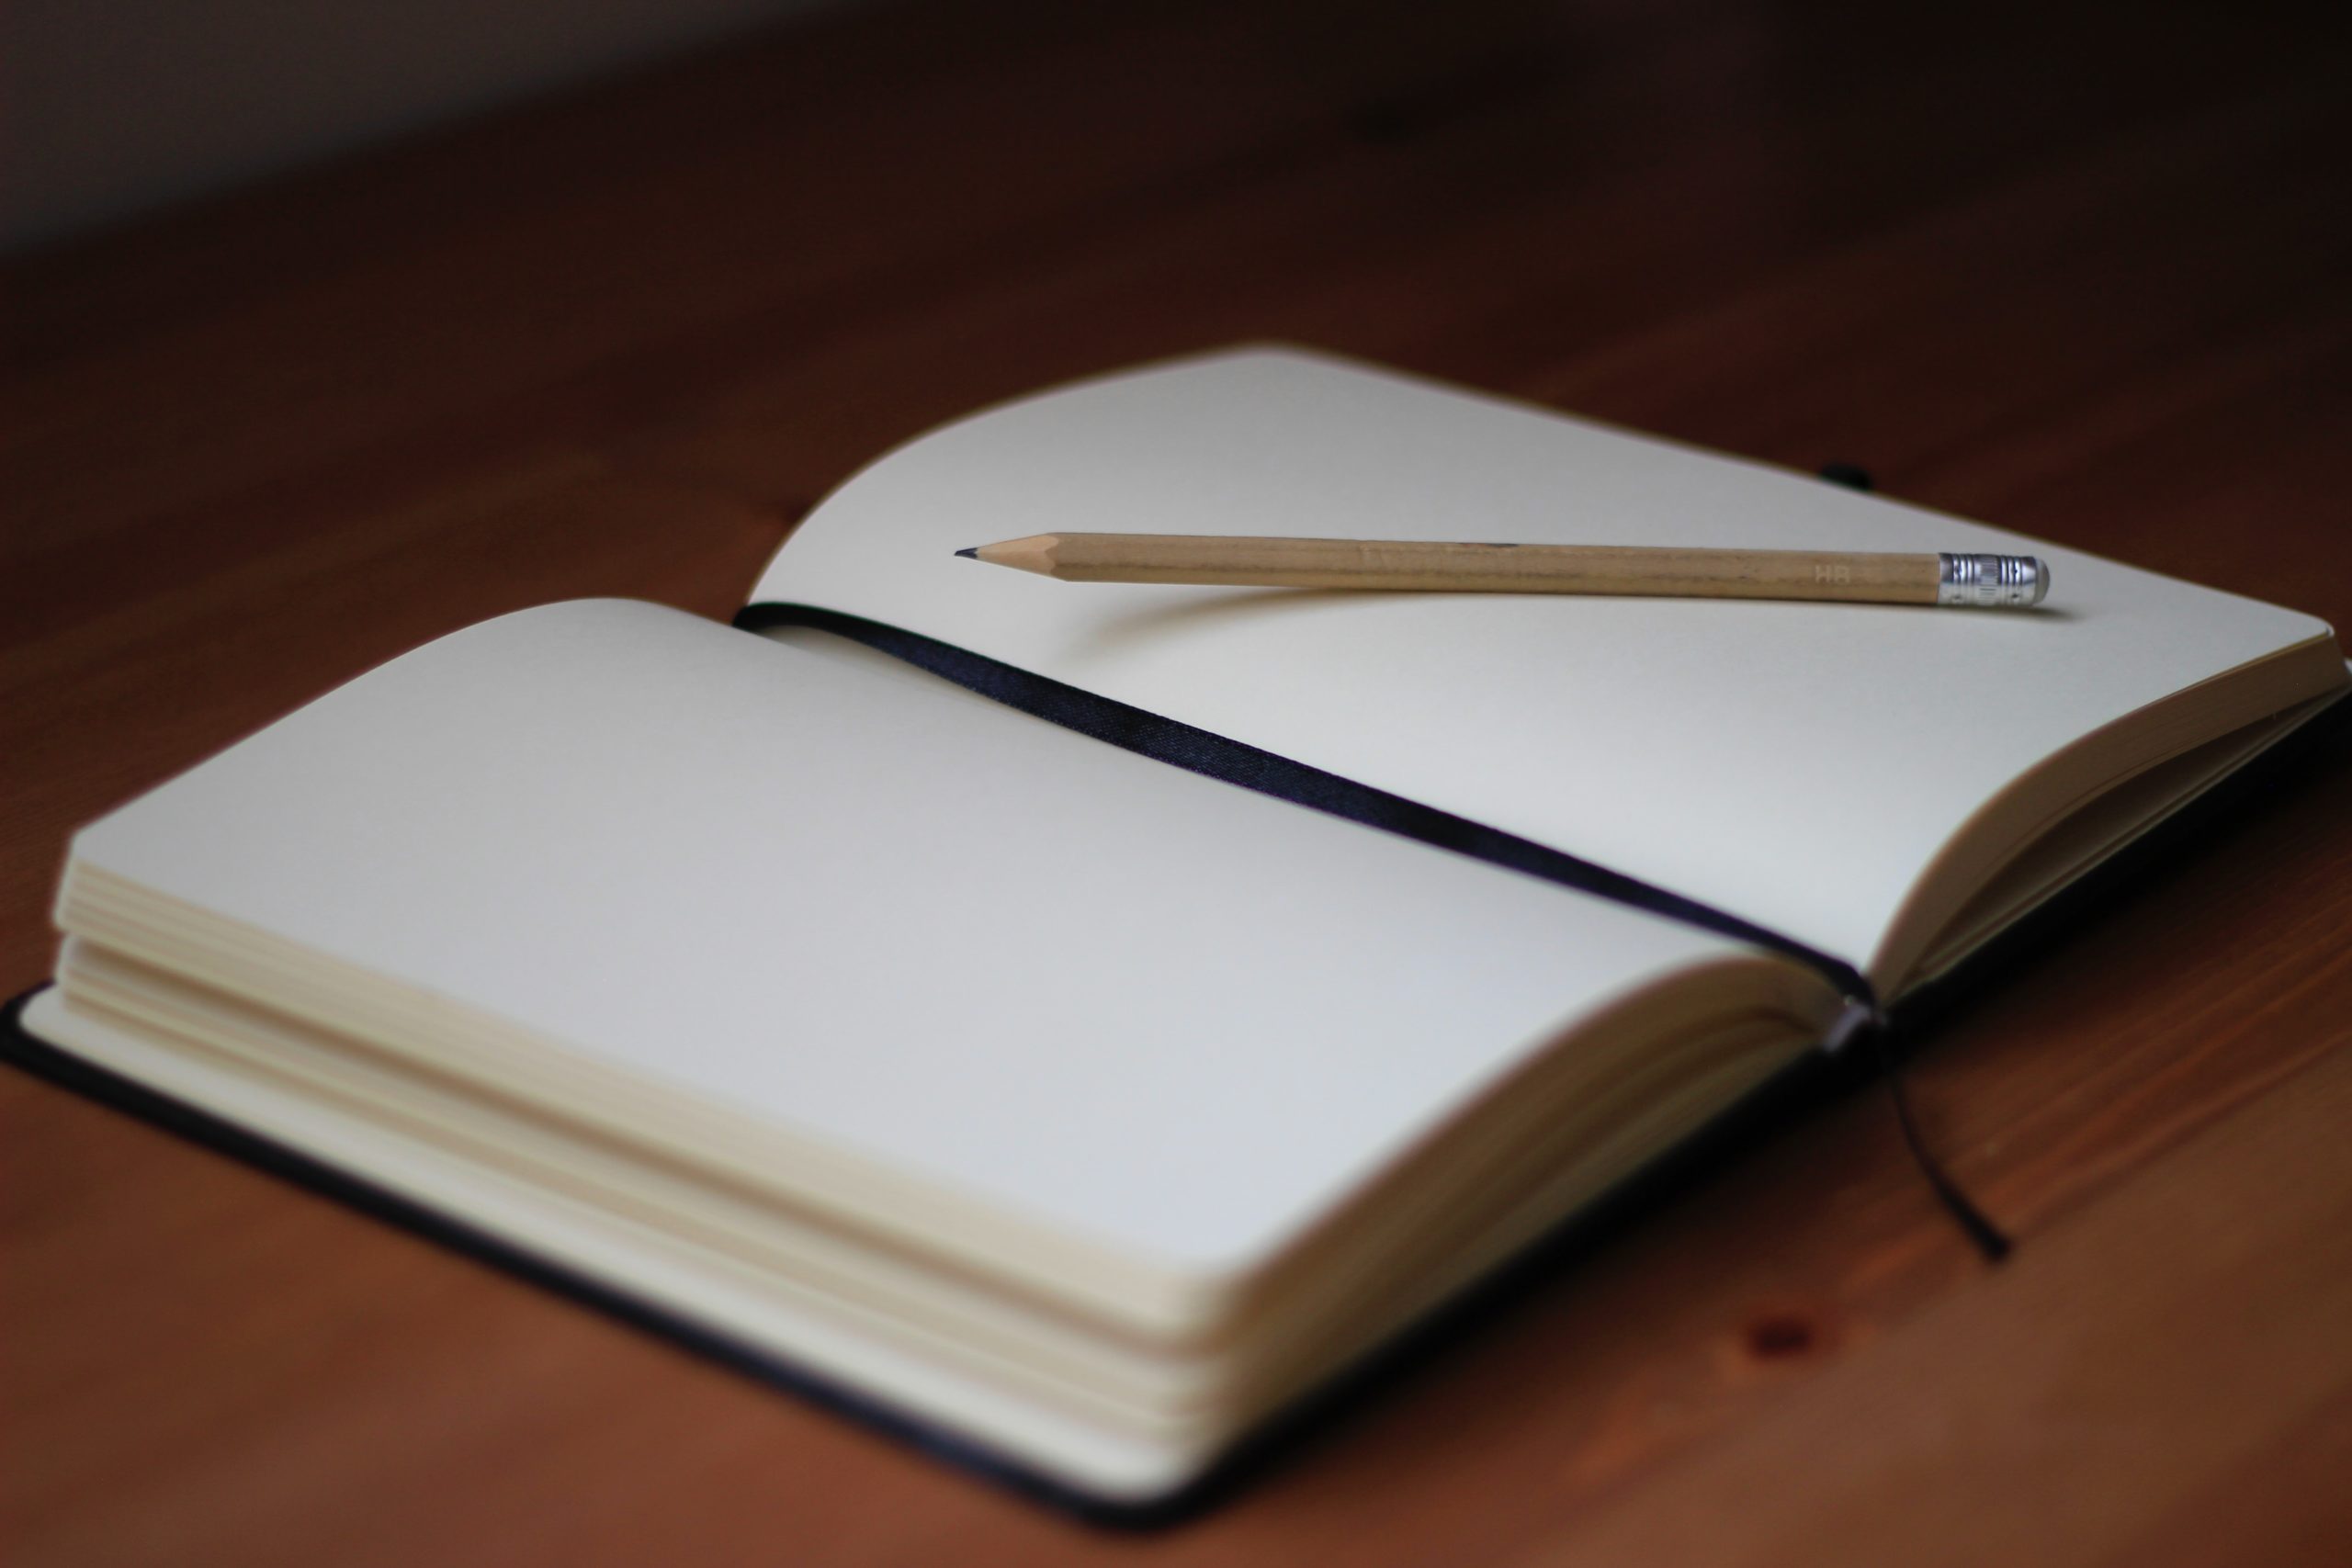 Bullet journaling improves productivity, creativity, health – The Purple  Tide